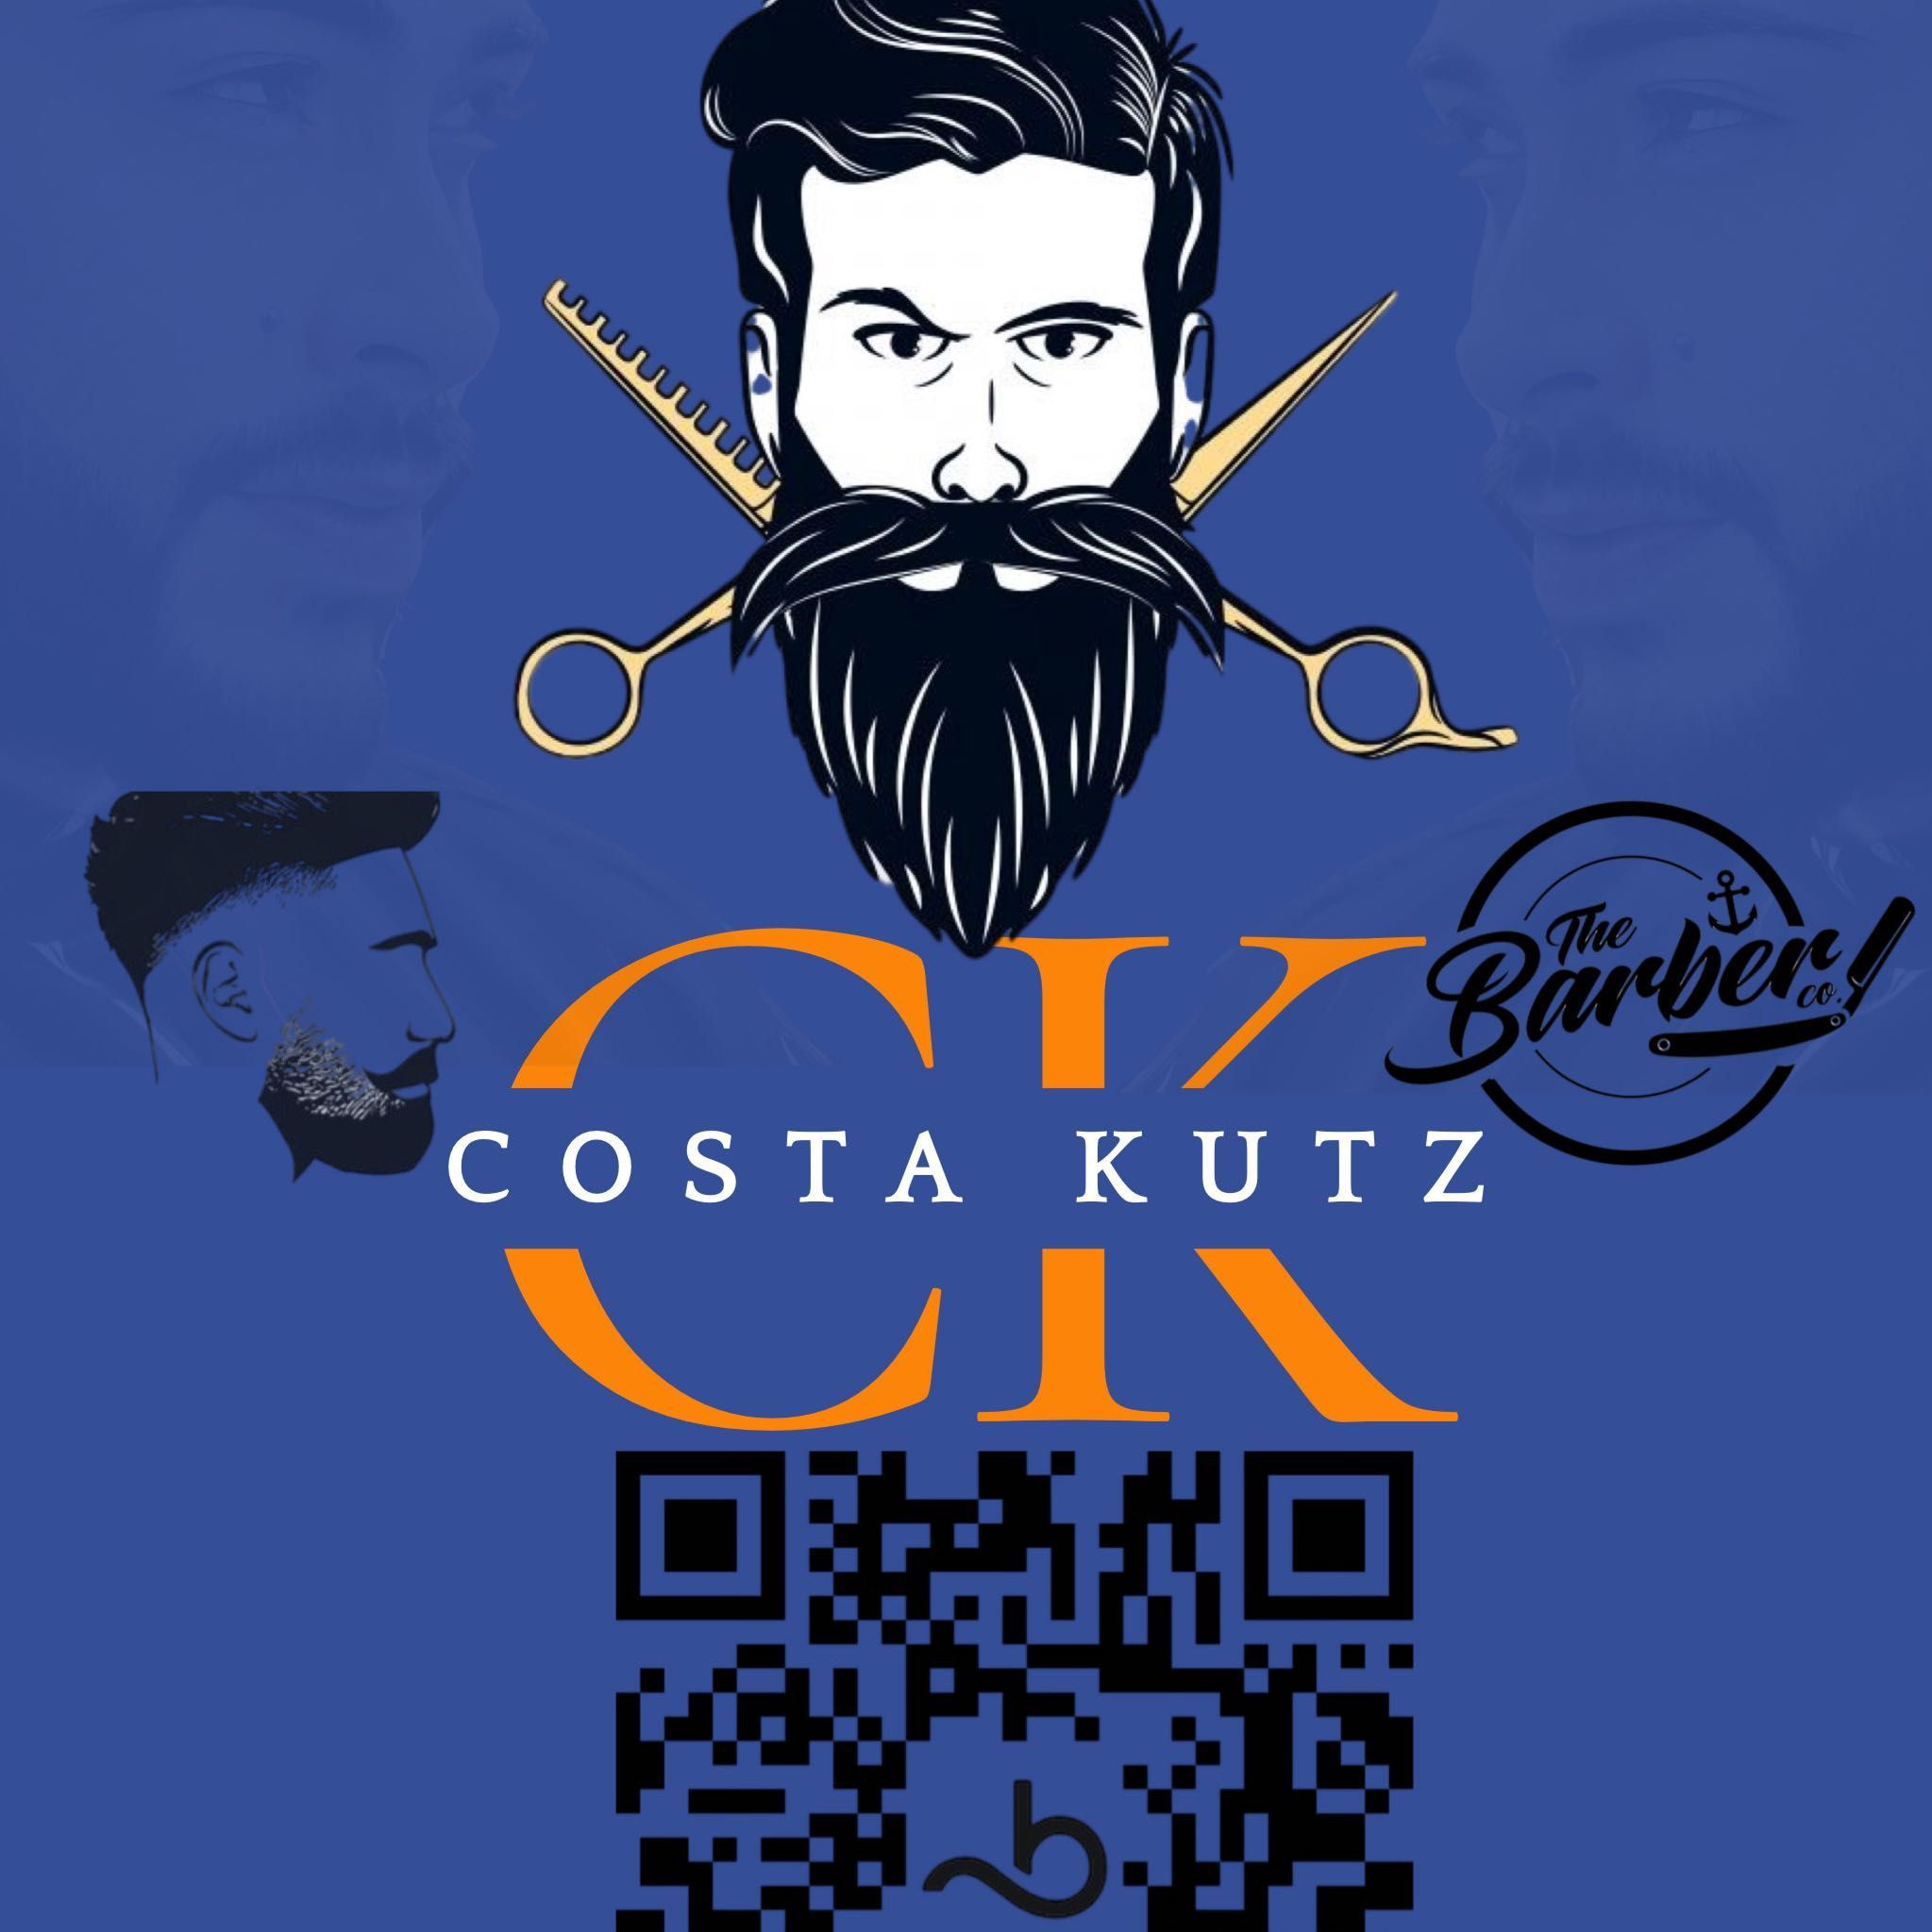 Costa Kutz (Setting Trnds), 4553 Austin bluffs pkwy, Colorado Springs, 80918